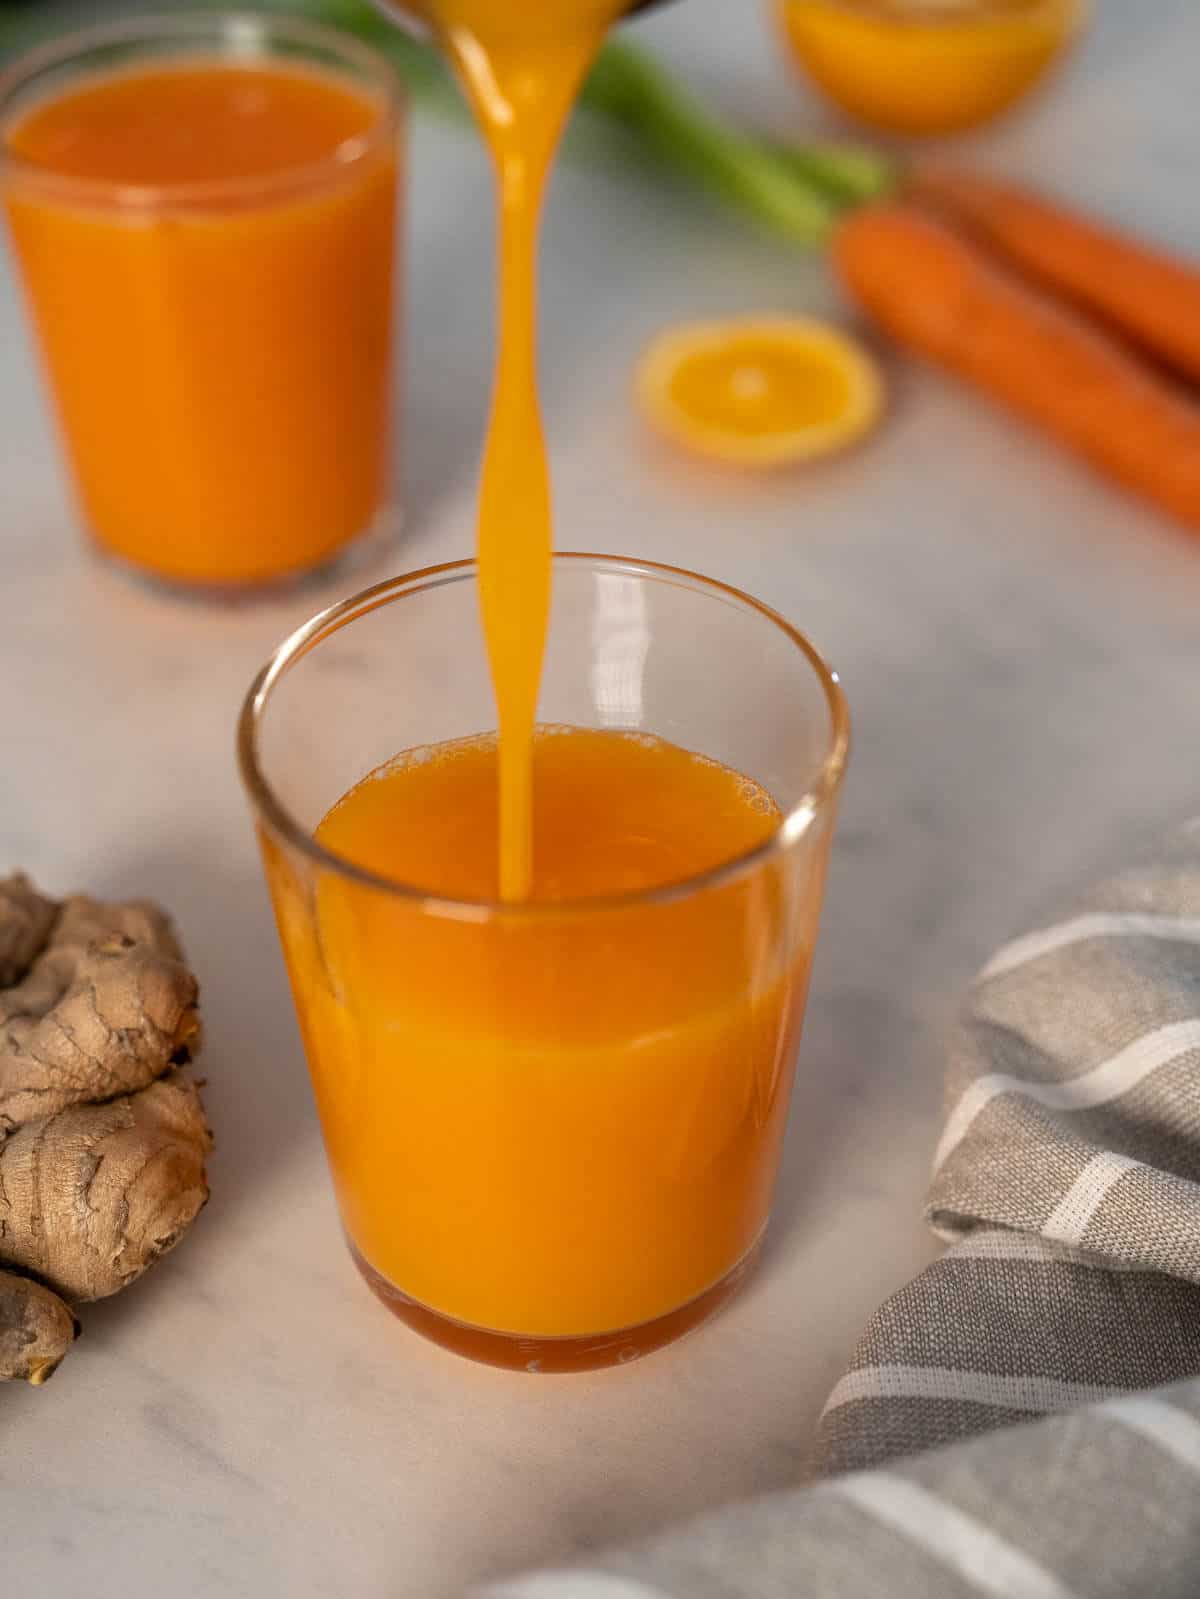 sirviendo zumo de zanahoria y naranja mas jengibre.